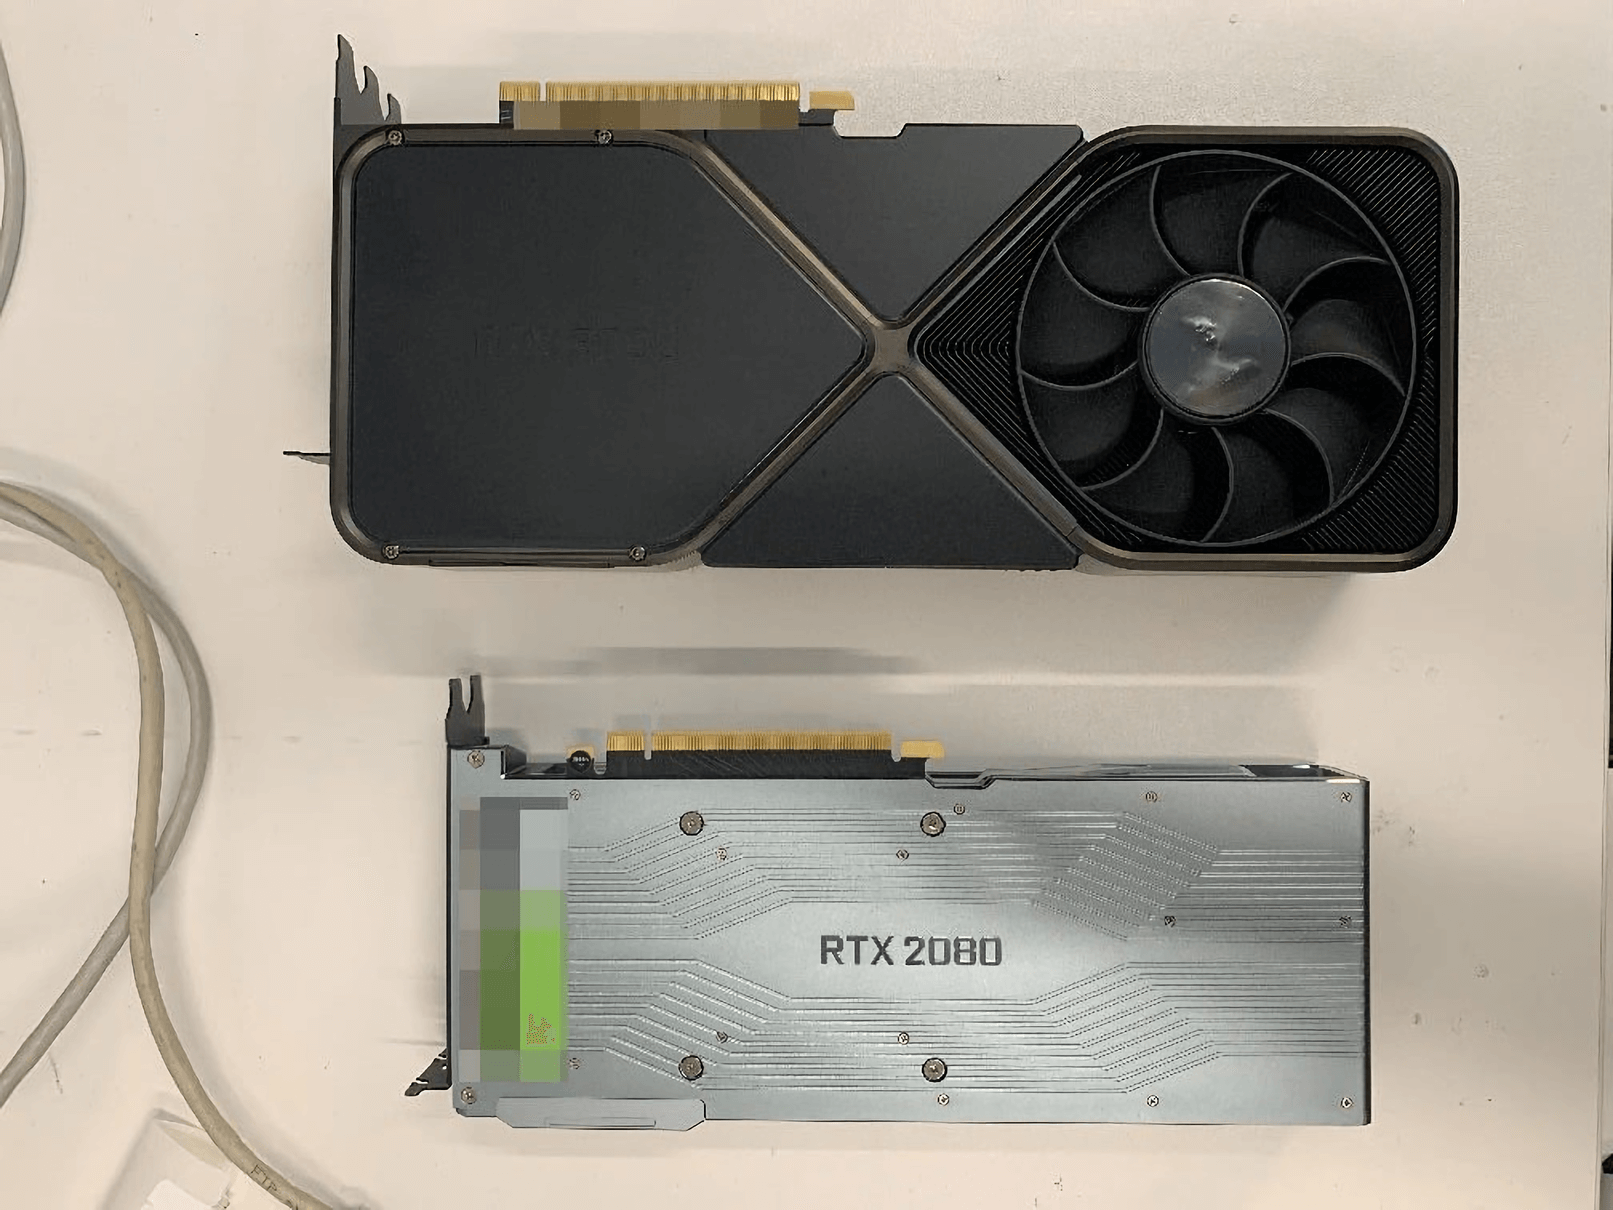 Leaked Nvidia GeForce RTX - reveal a massive card